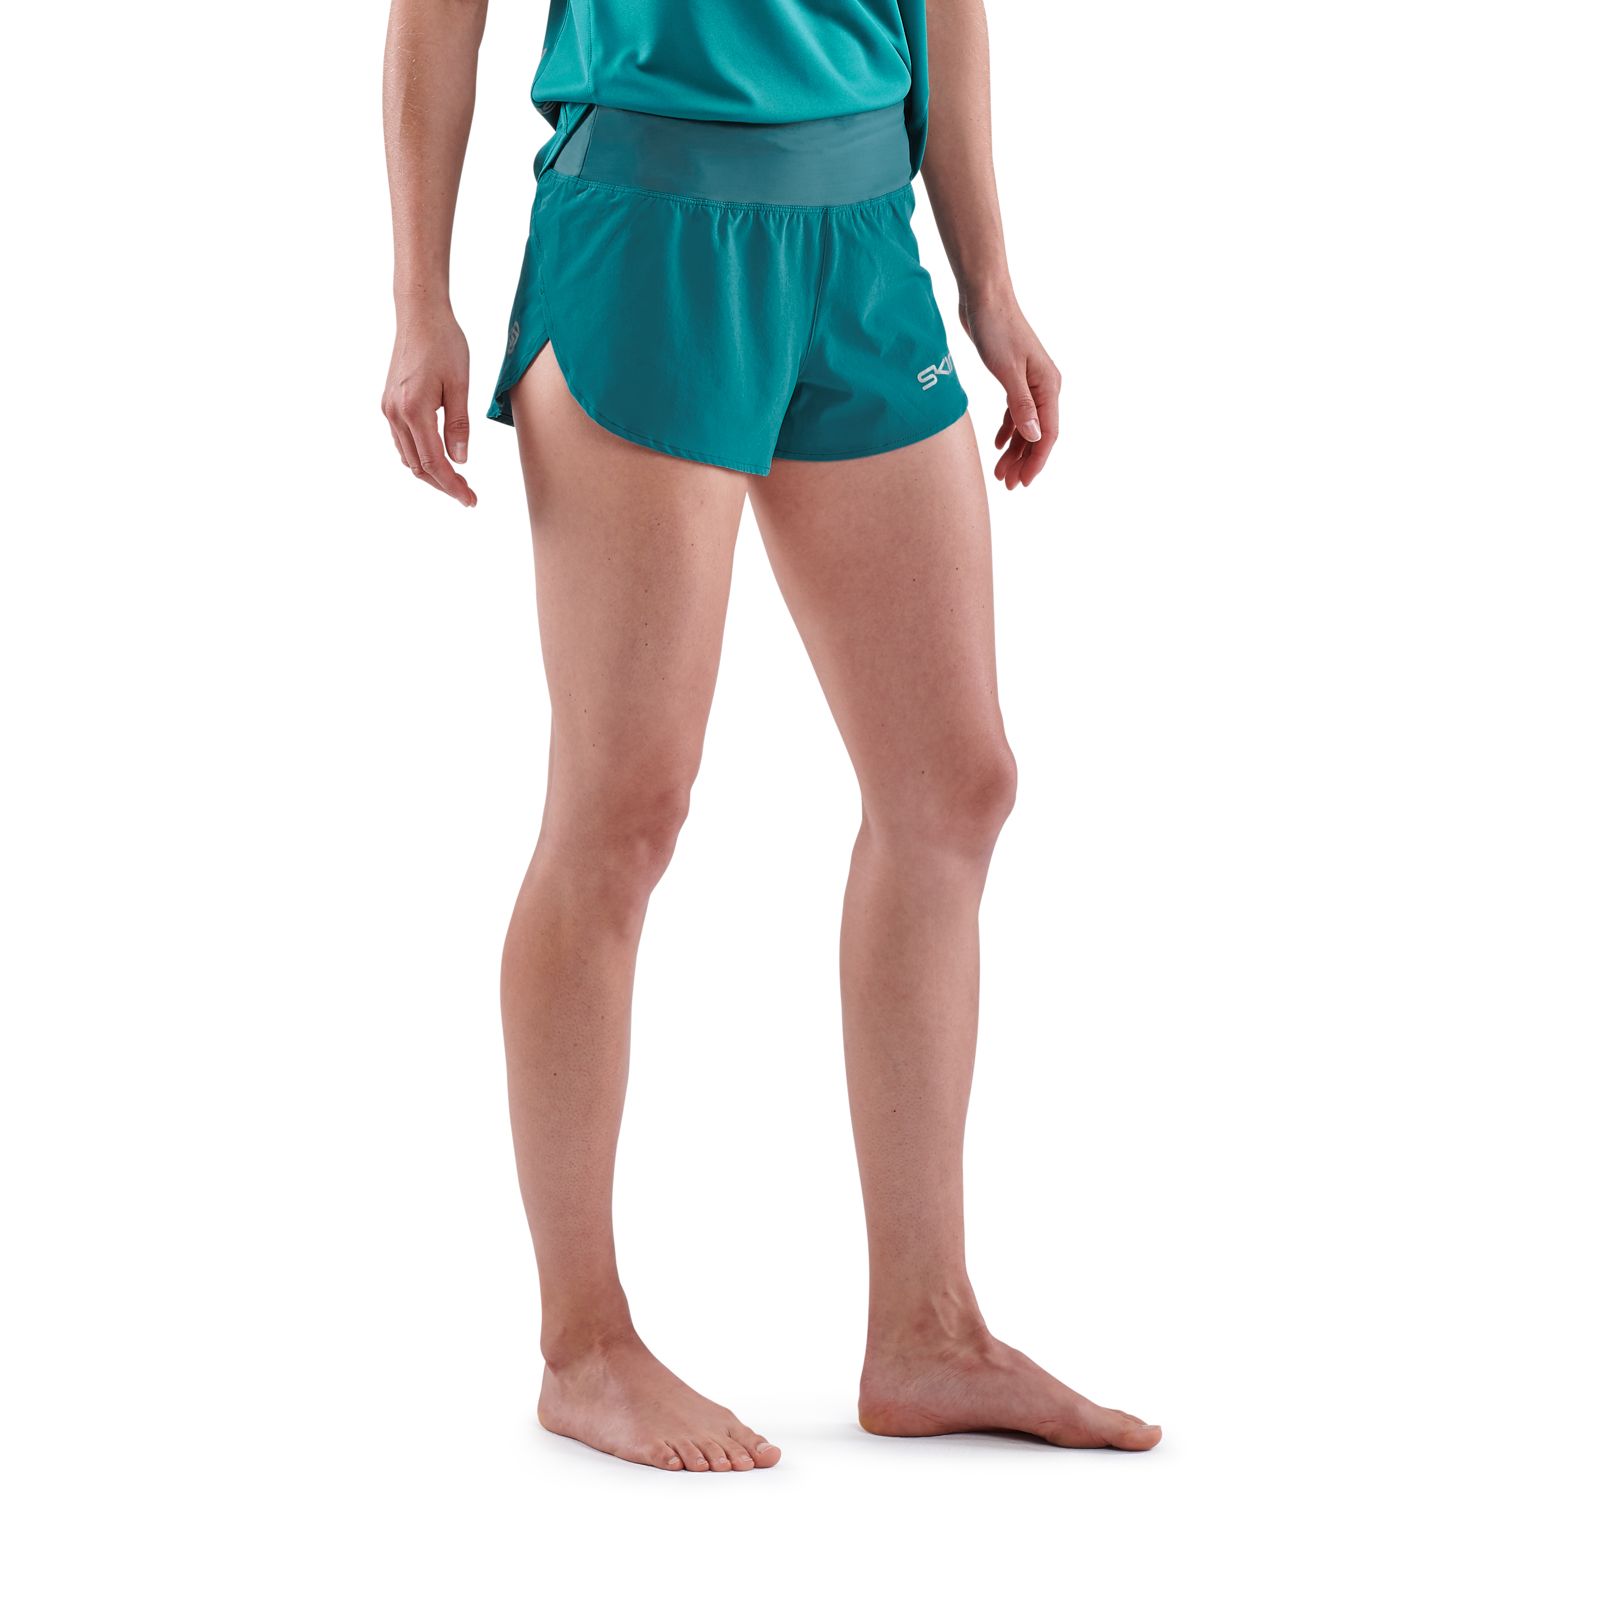 Salomon Advanced Skin Active Dry Teal Blue Running Shorts Built In Underwear  XS